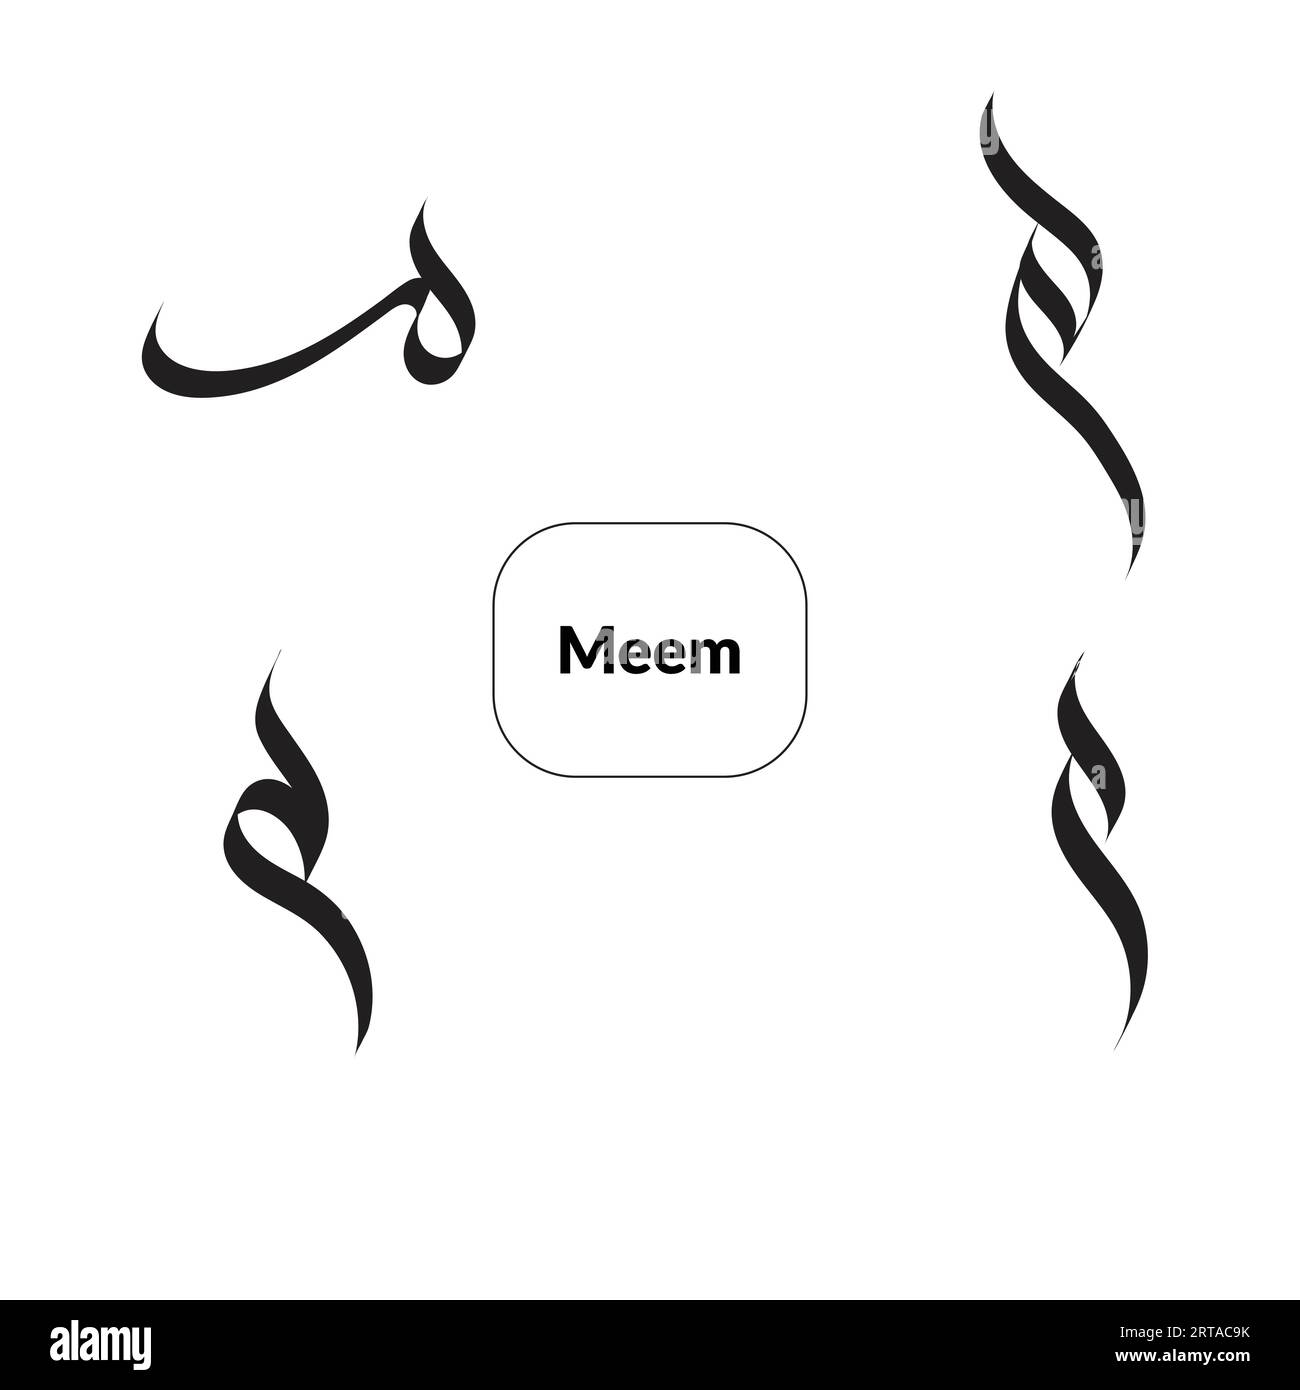 Calligrafia araba stile al-Saif, alfabeto Meem in quattro varianti astratto vactor. Illustrazione Vettoriale